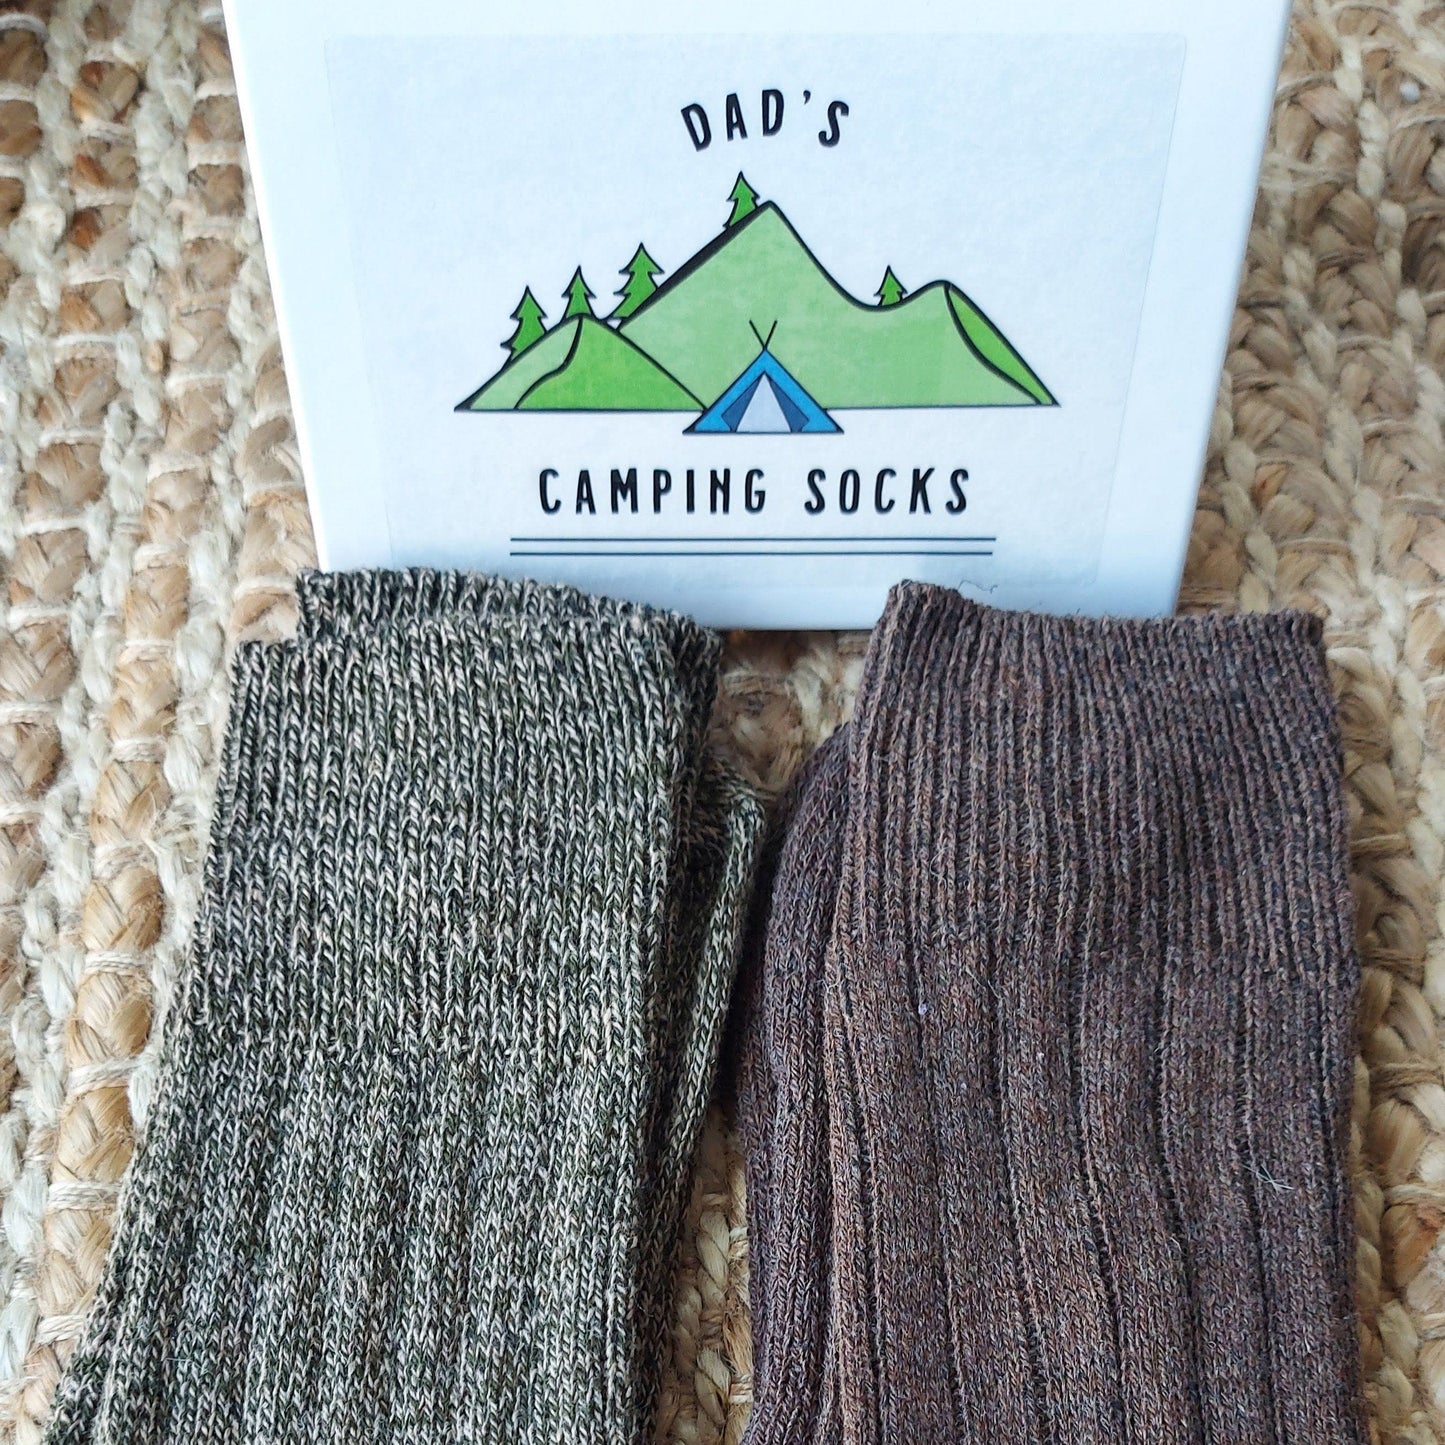 Camping Socks in a Box